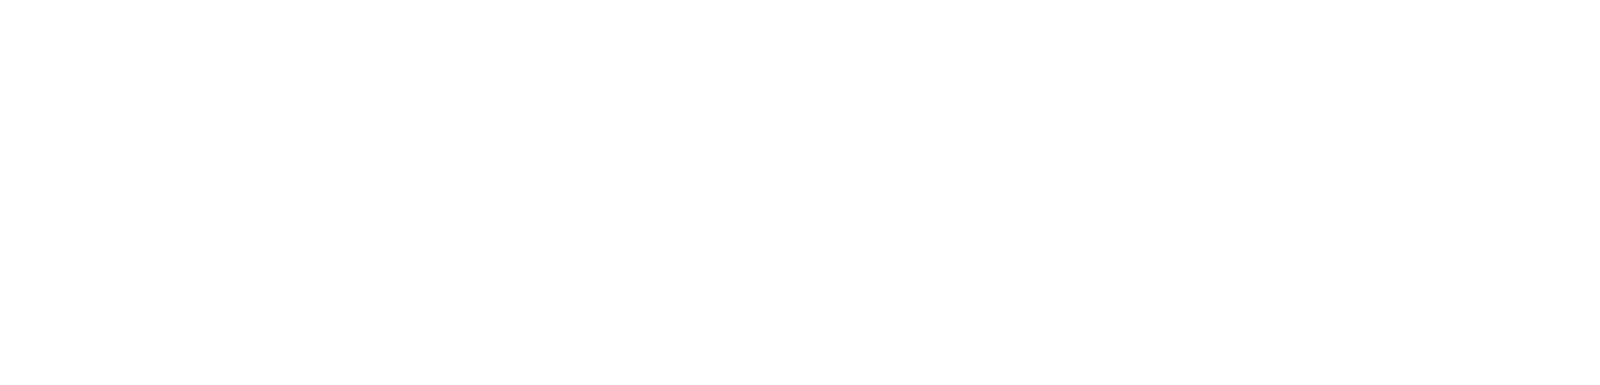 Exness-Logo-New-03